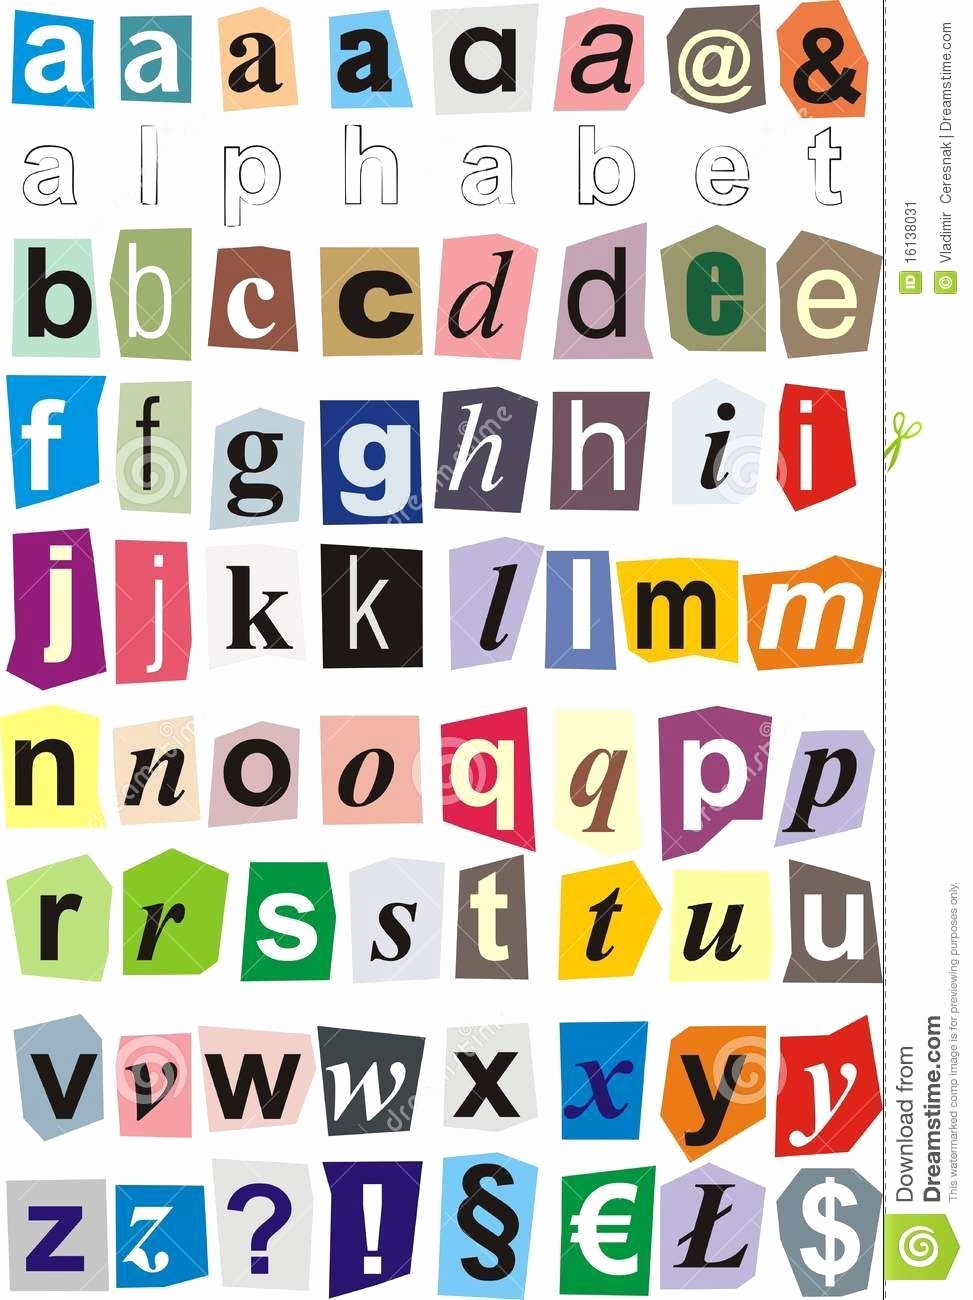 Alphabet Cut Out Letters Fresh Cut Out Letters Classroom